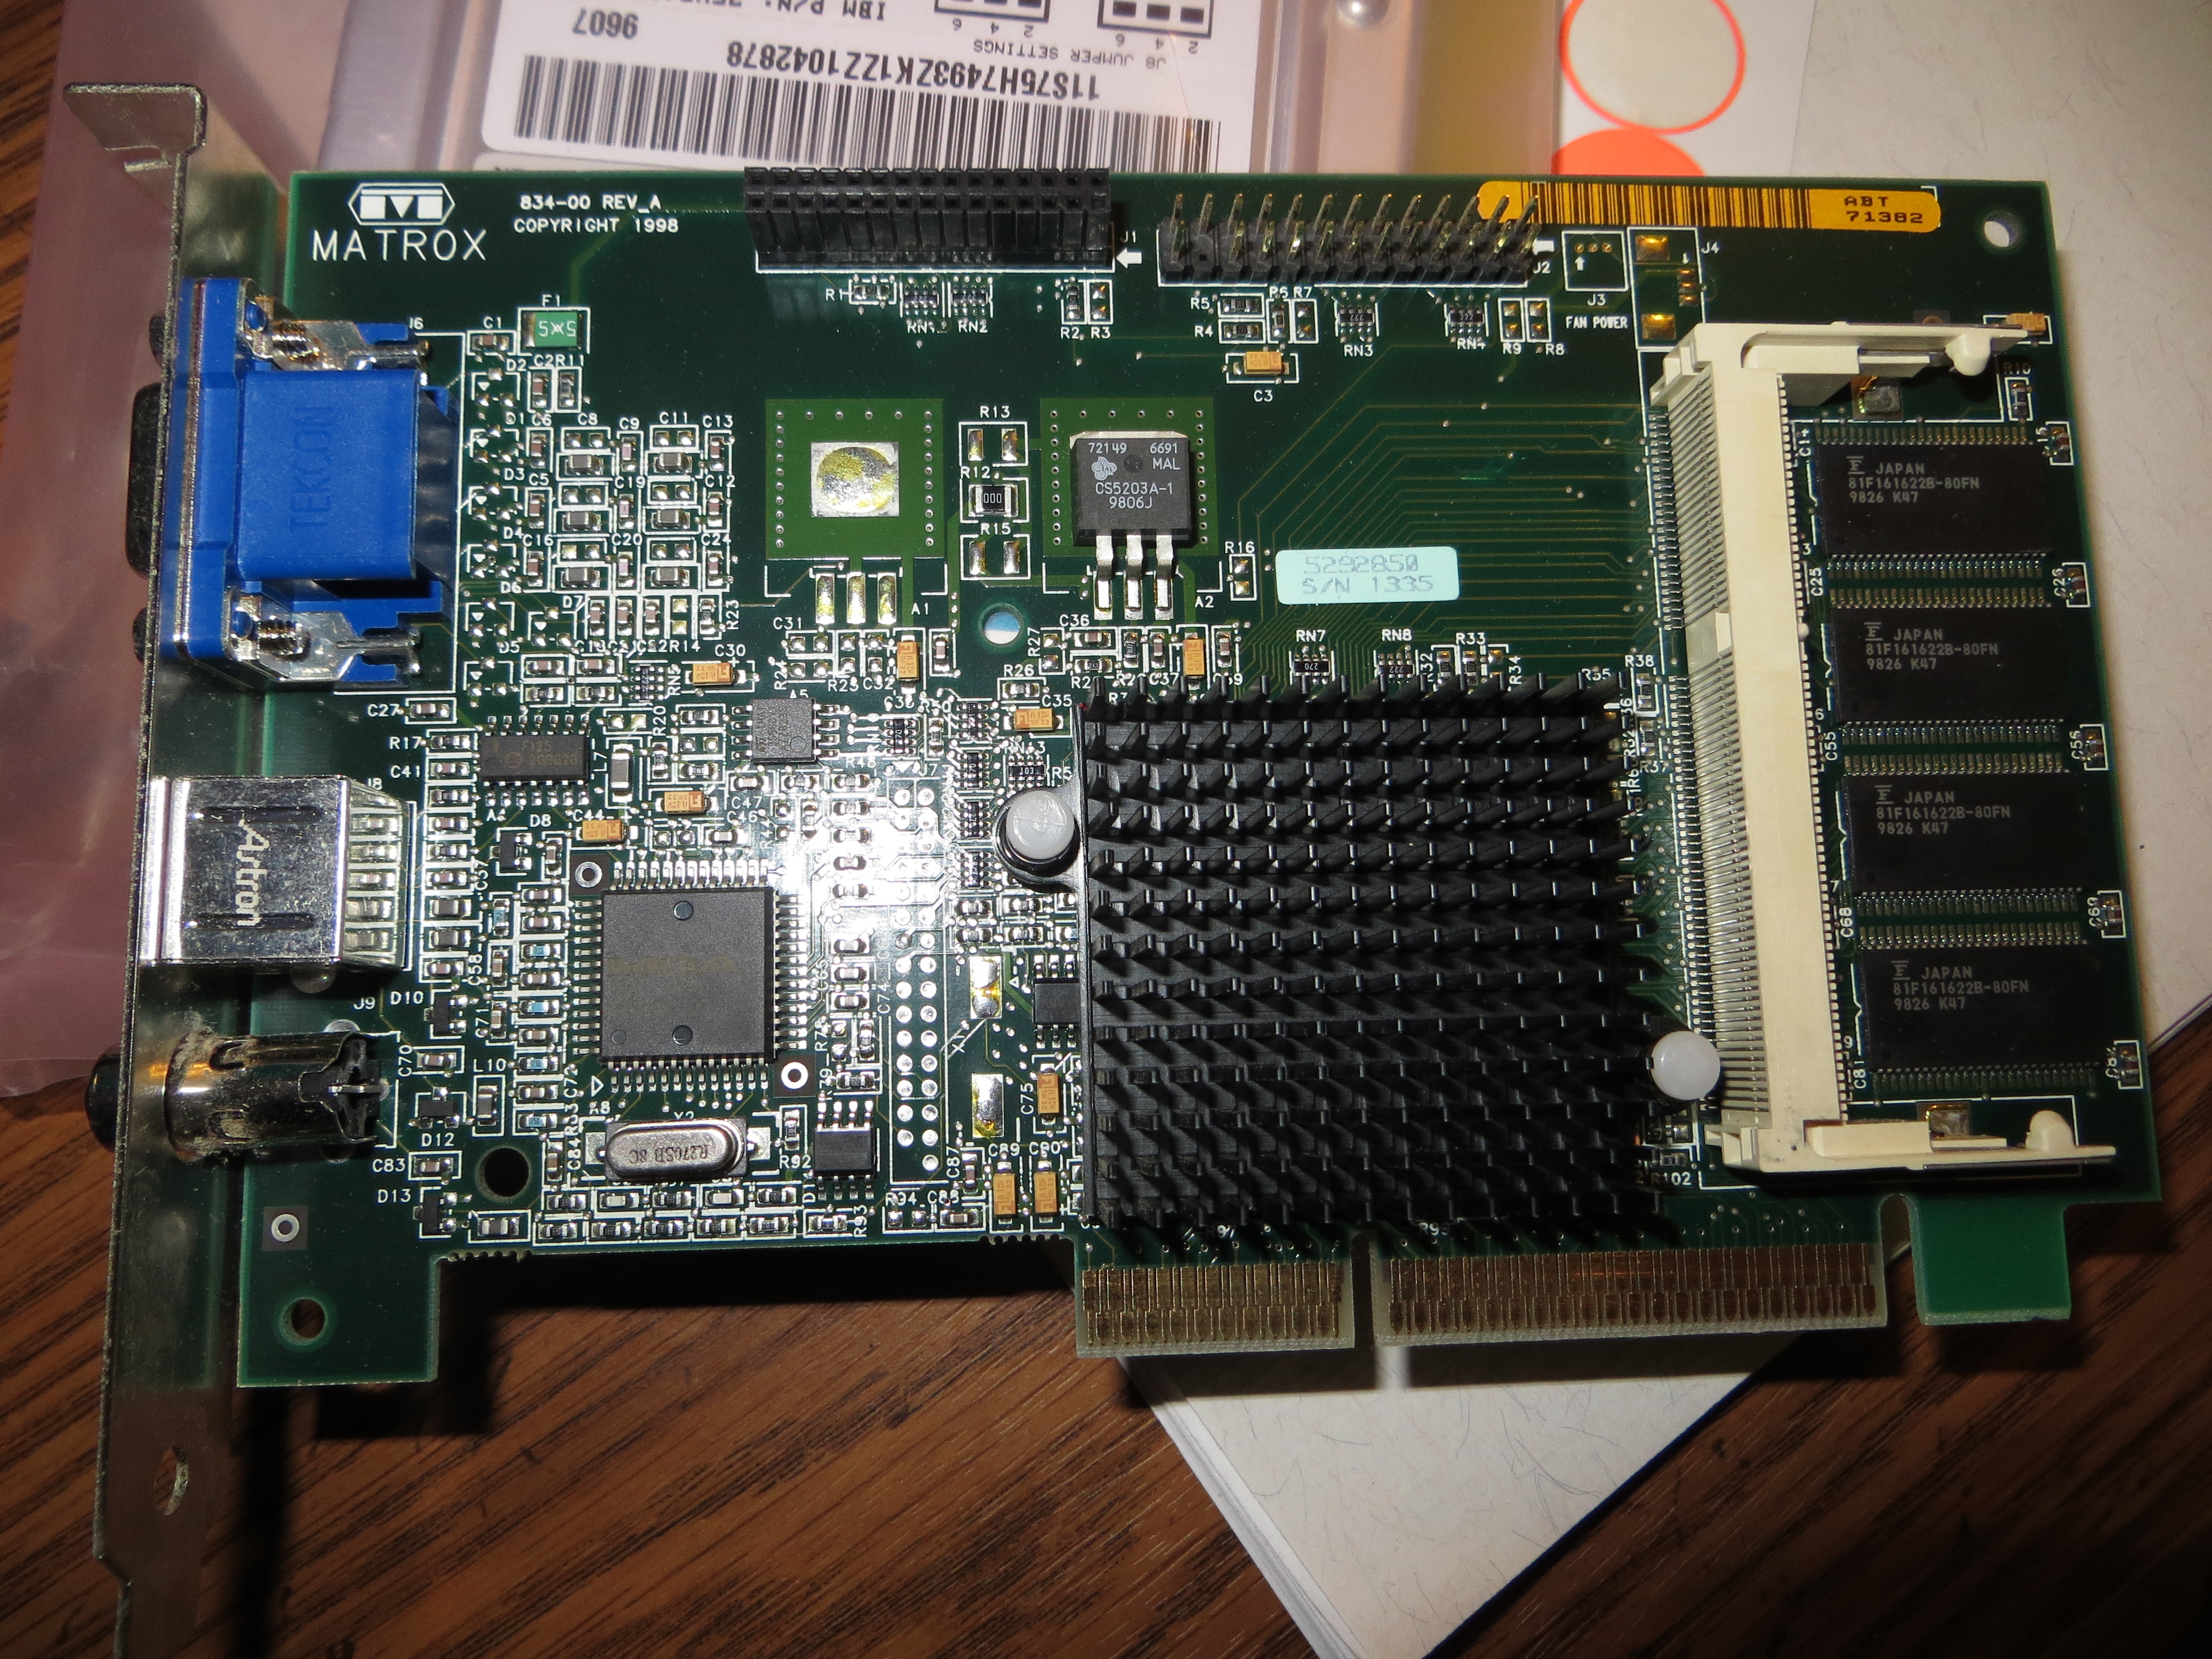 Intel Pentium II PC Matrox Graphics Card